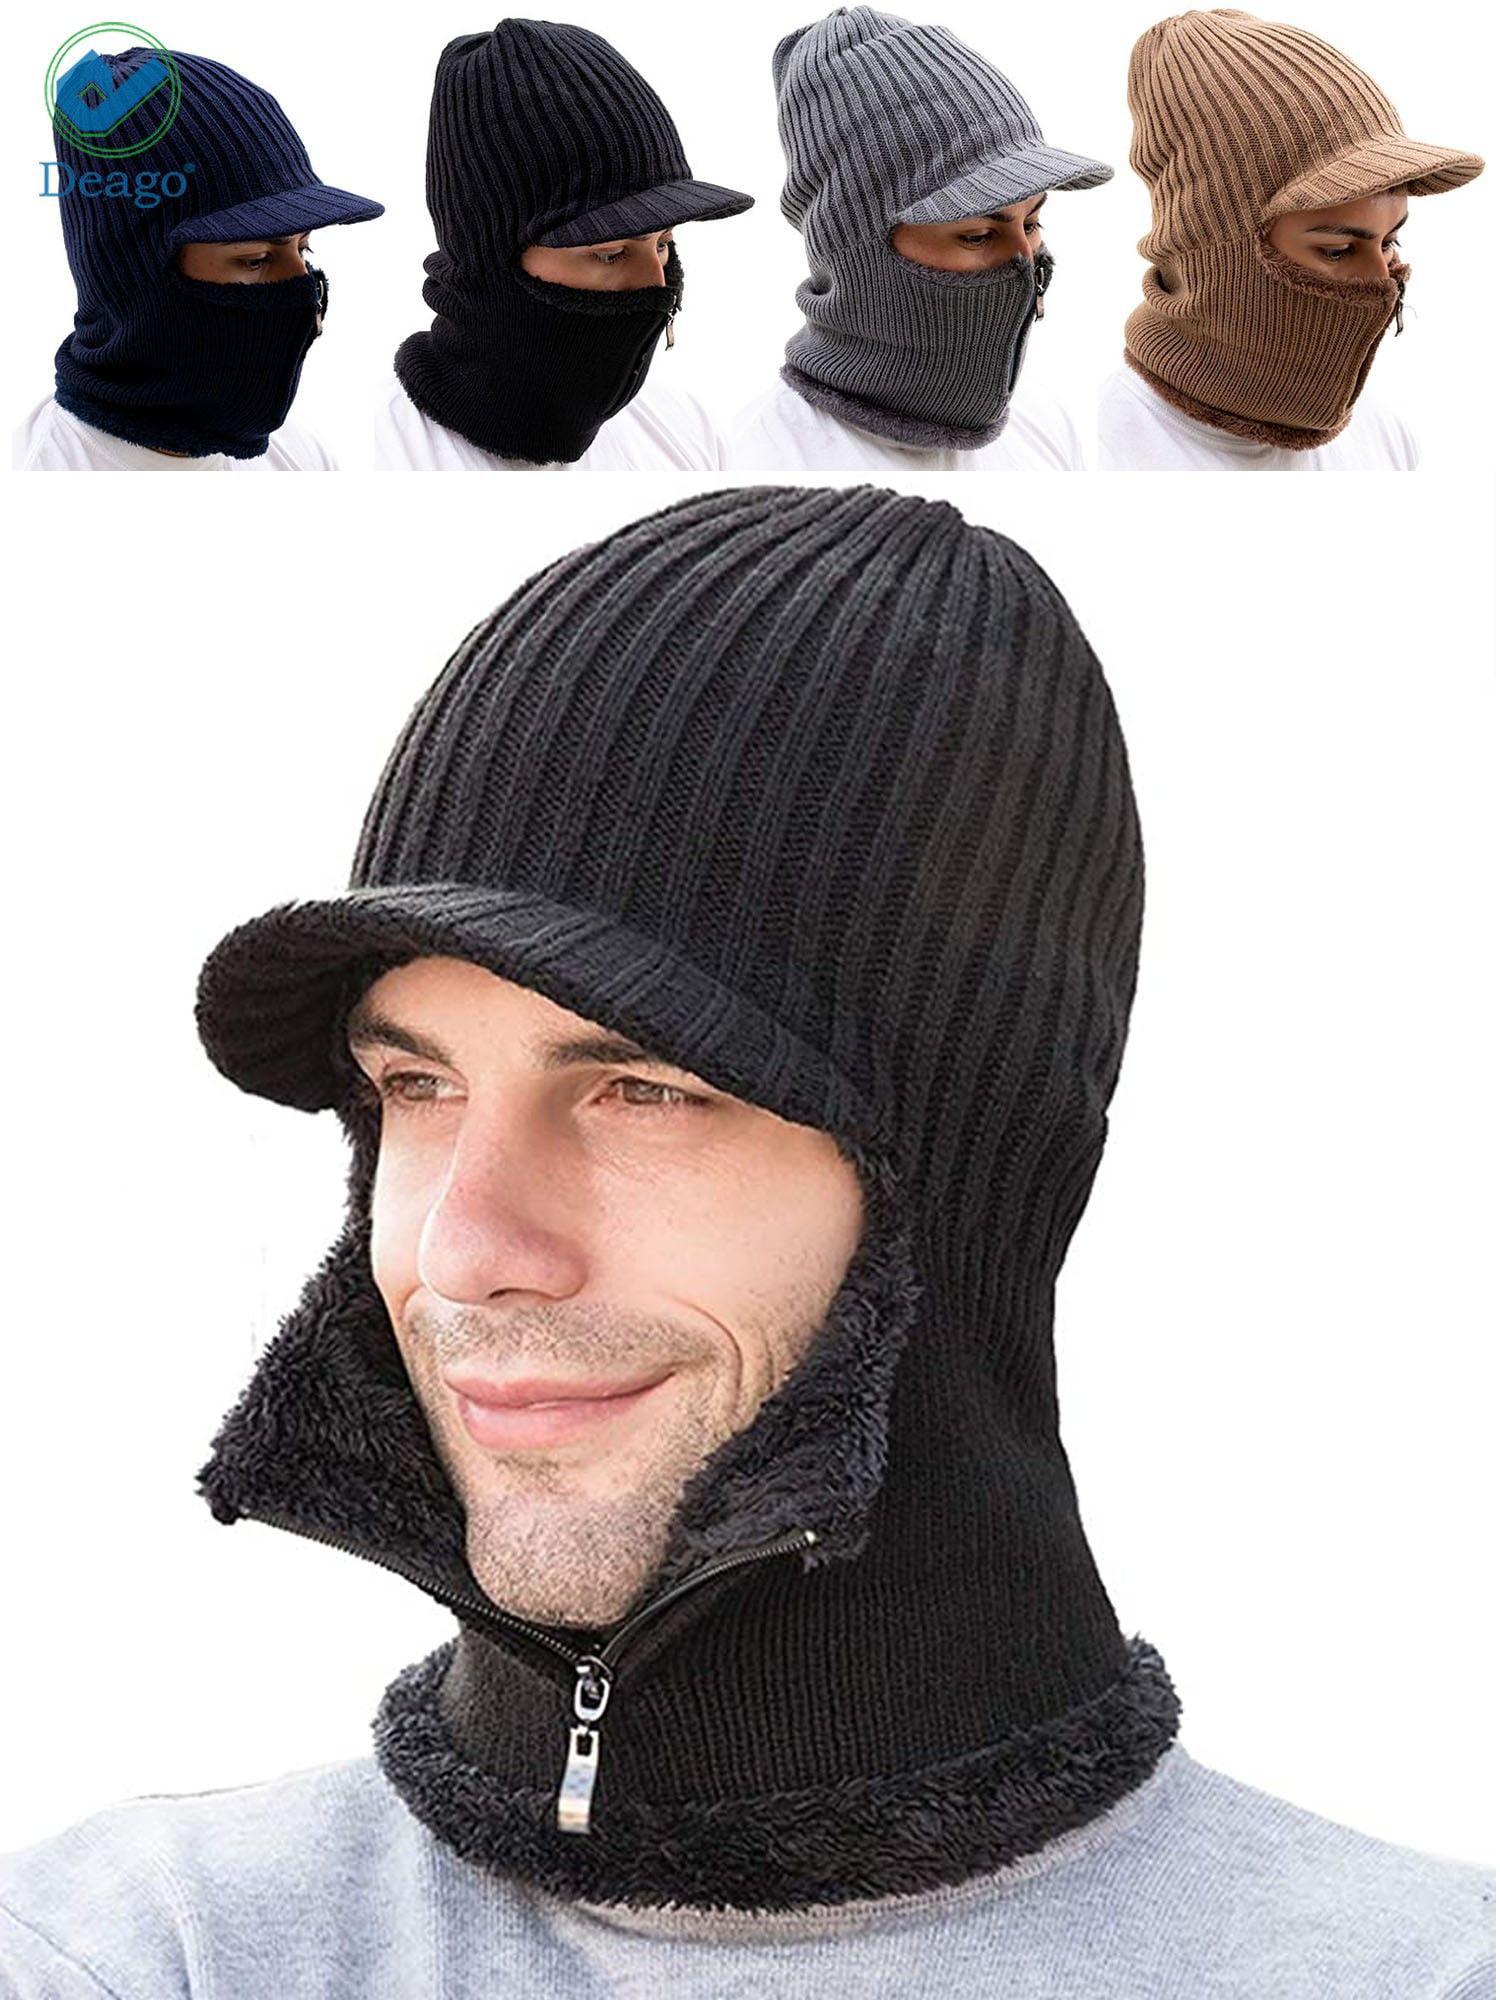 Craft Sportswear Big Logo Knit Soft Beanie Hat snowboard/cold weather/resort/headwear/warm/protection/cap